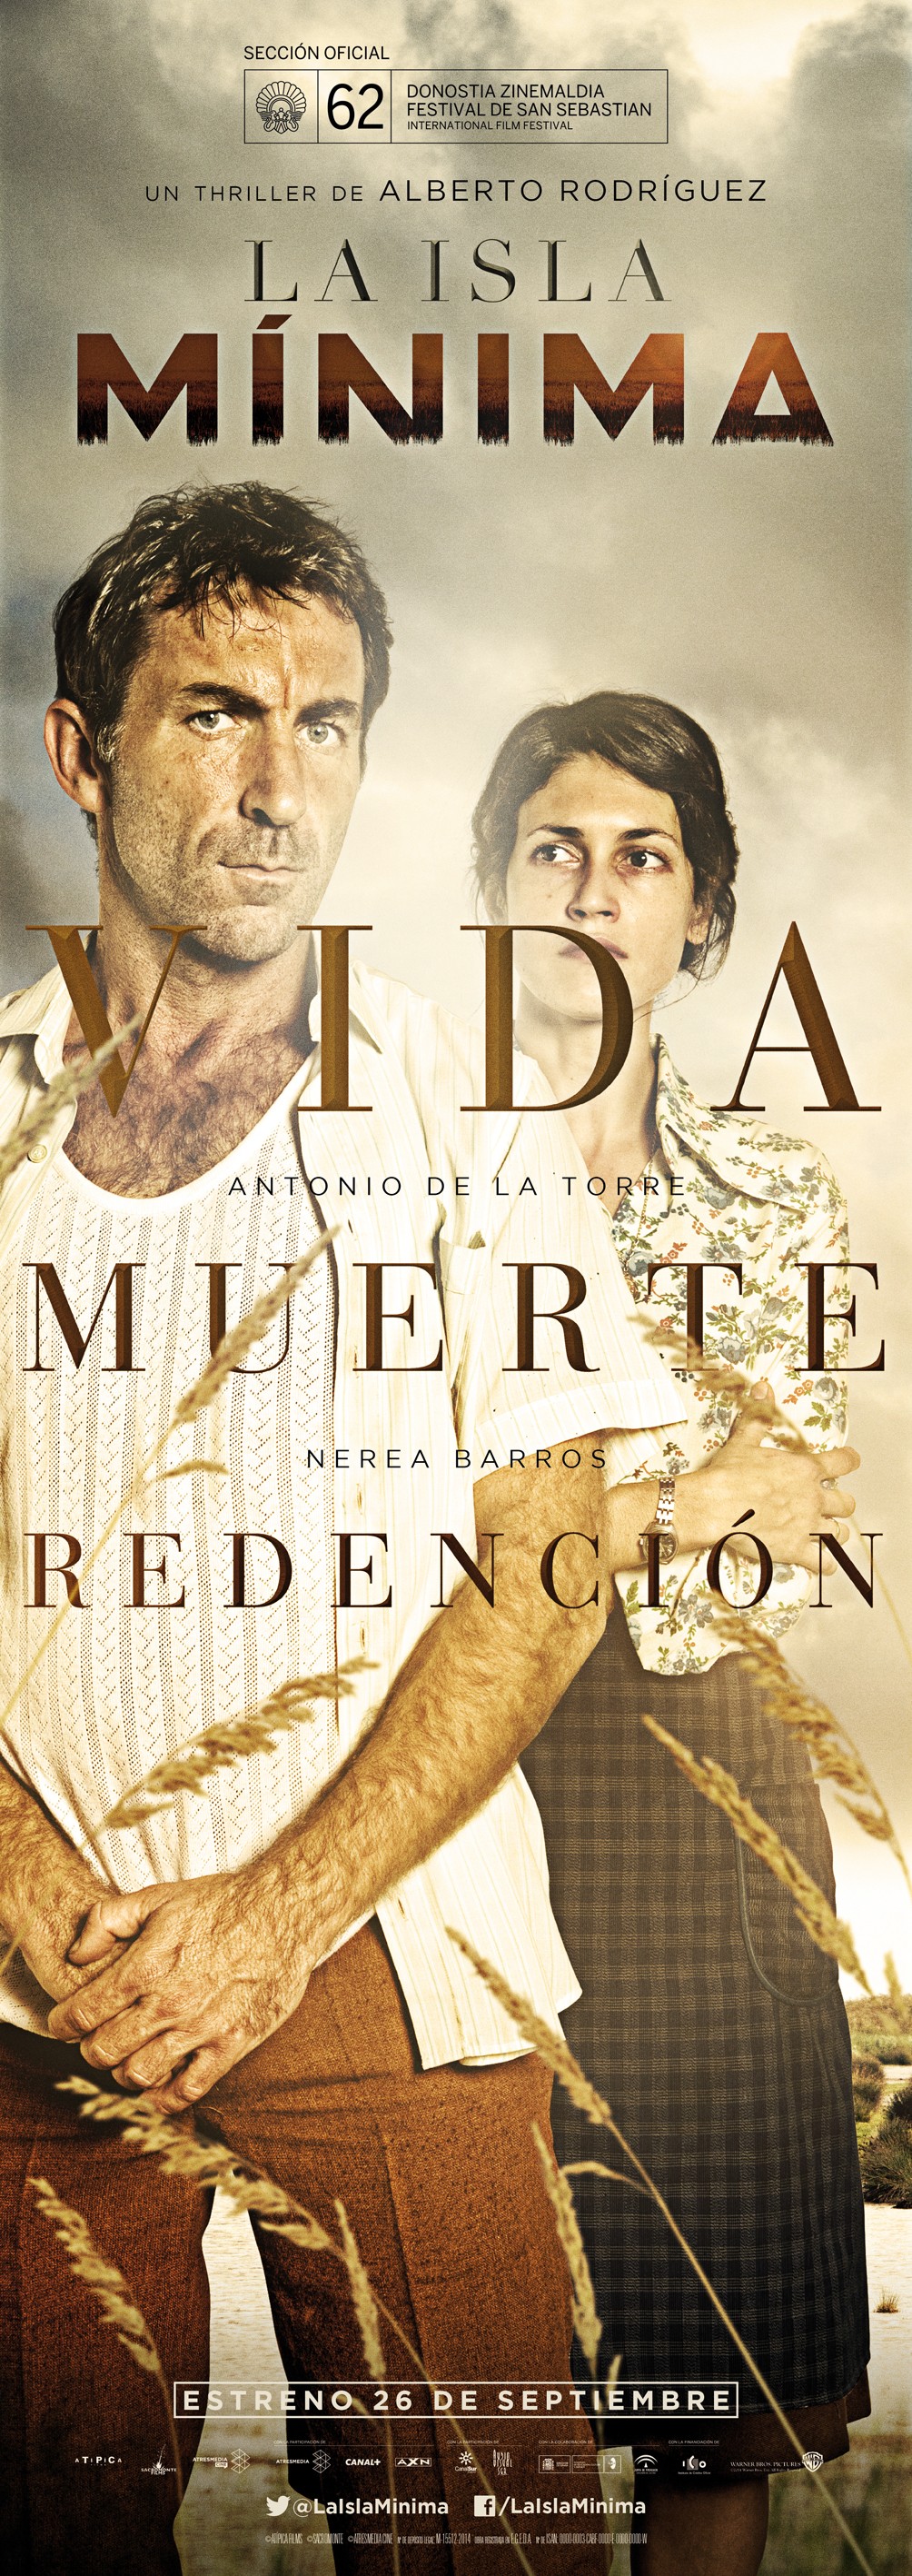 Mega Sized Movie Poster Image for La isla mínima (#4 of 7)